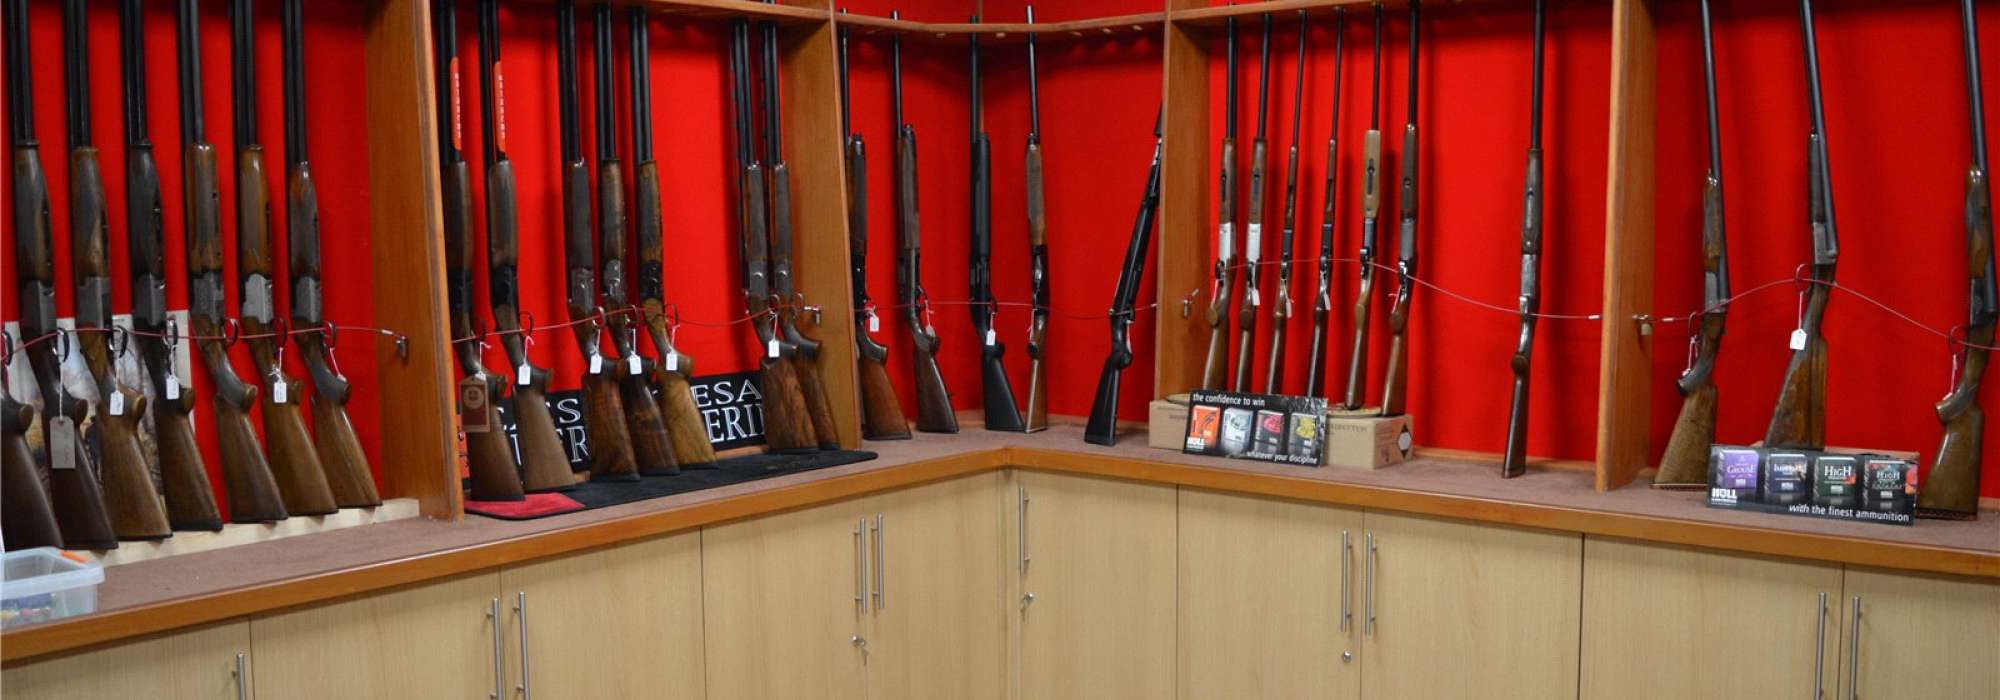 Guns in cabinets